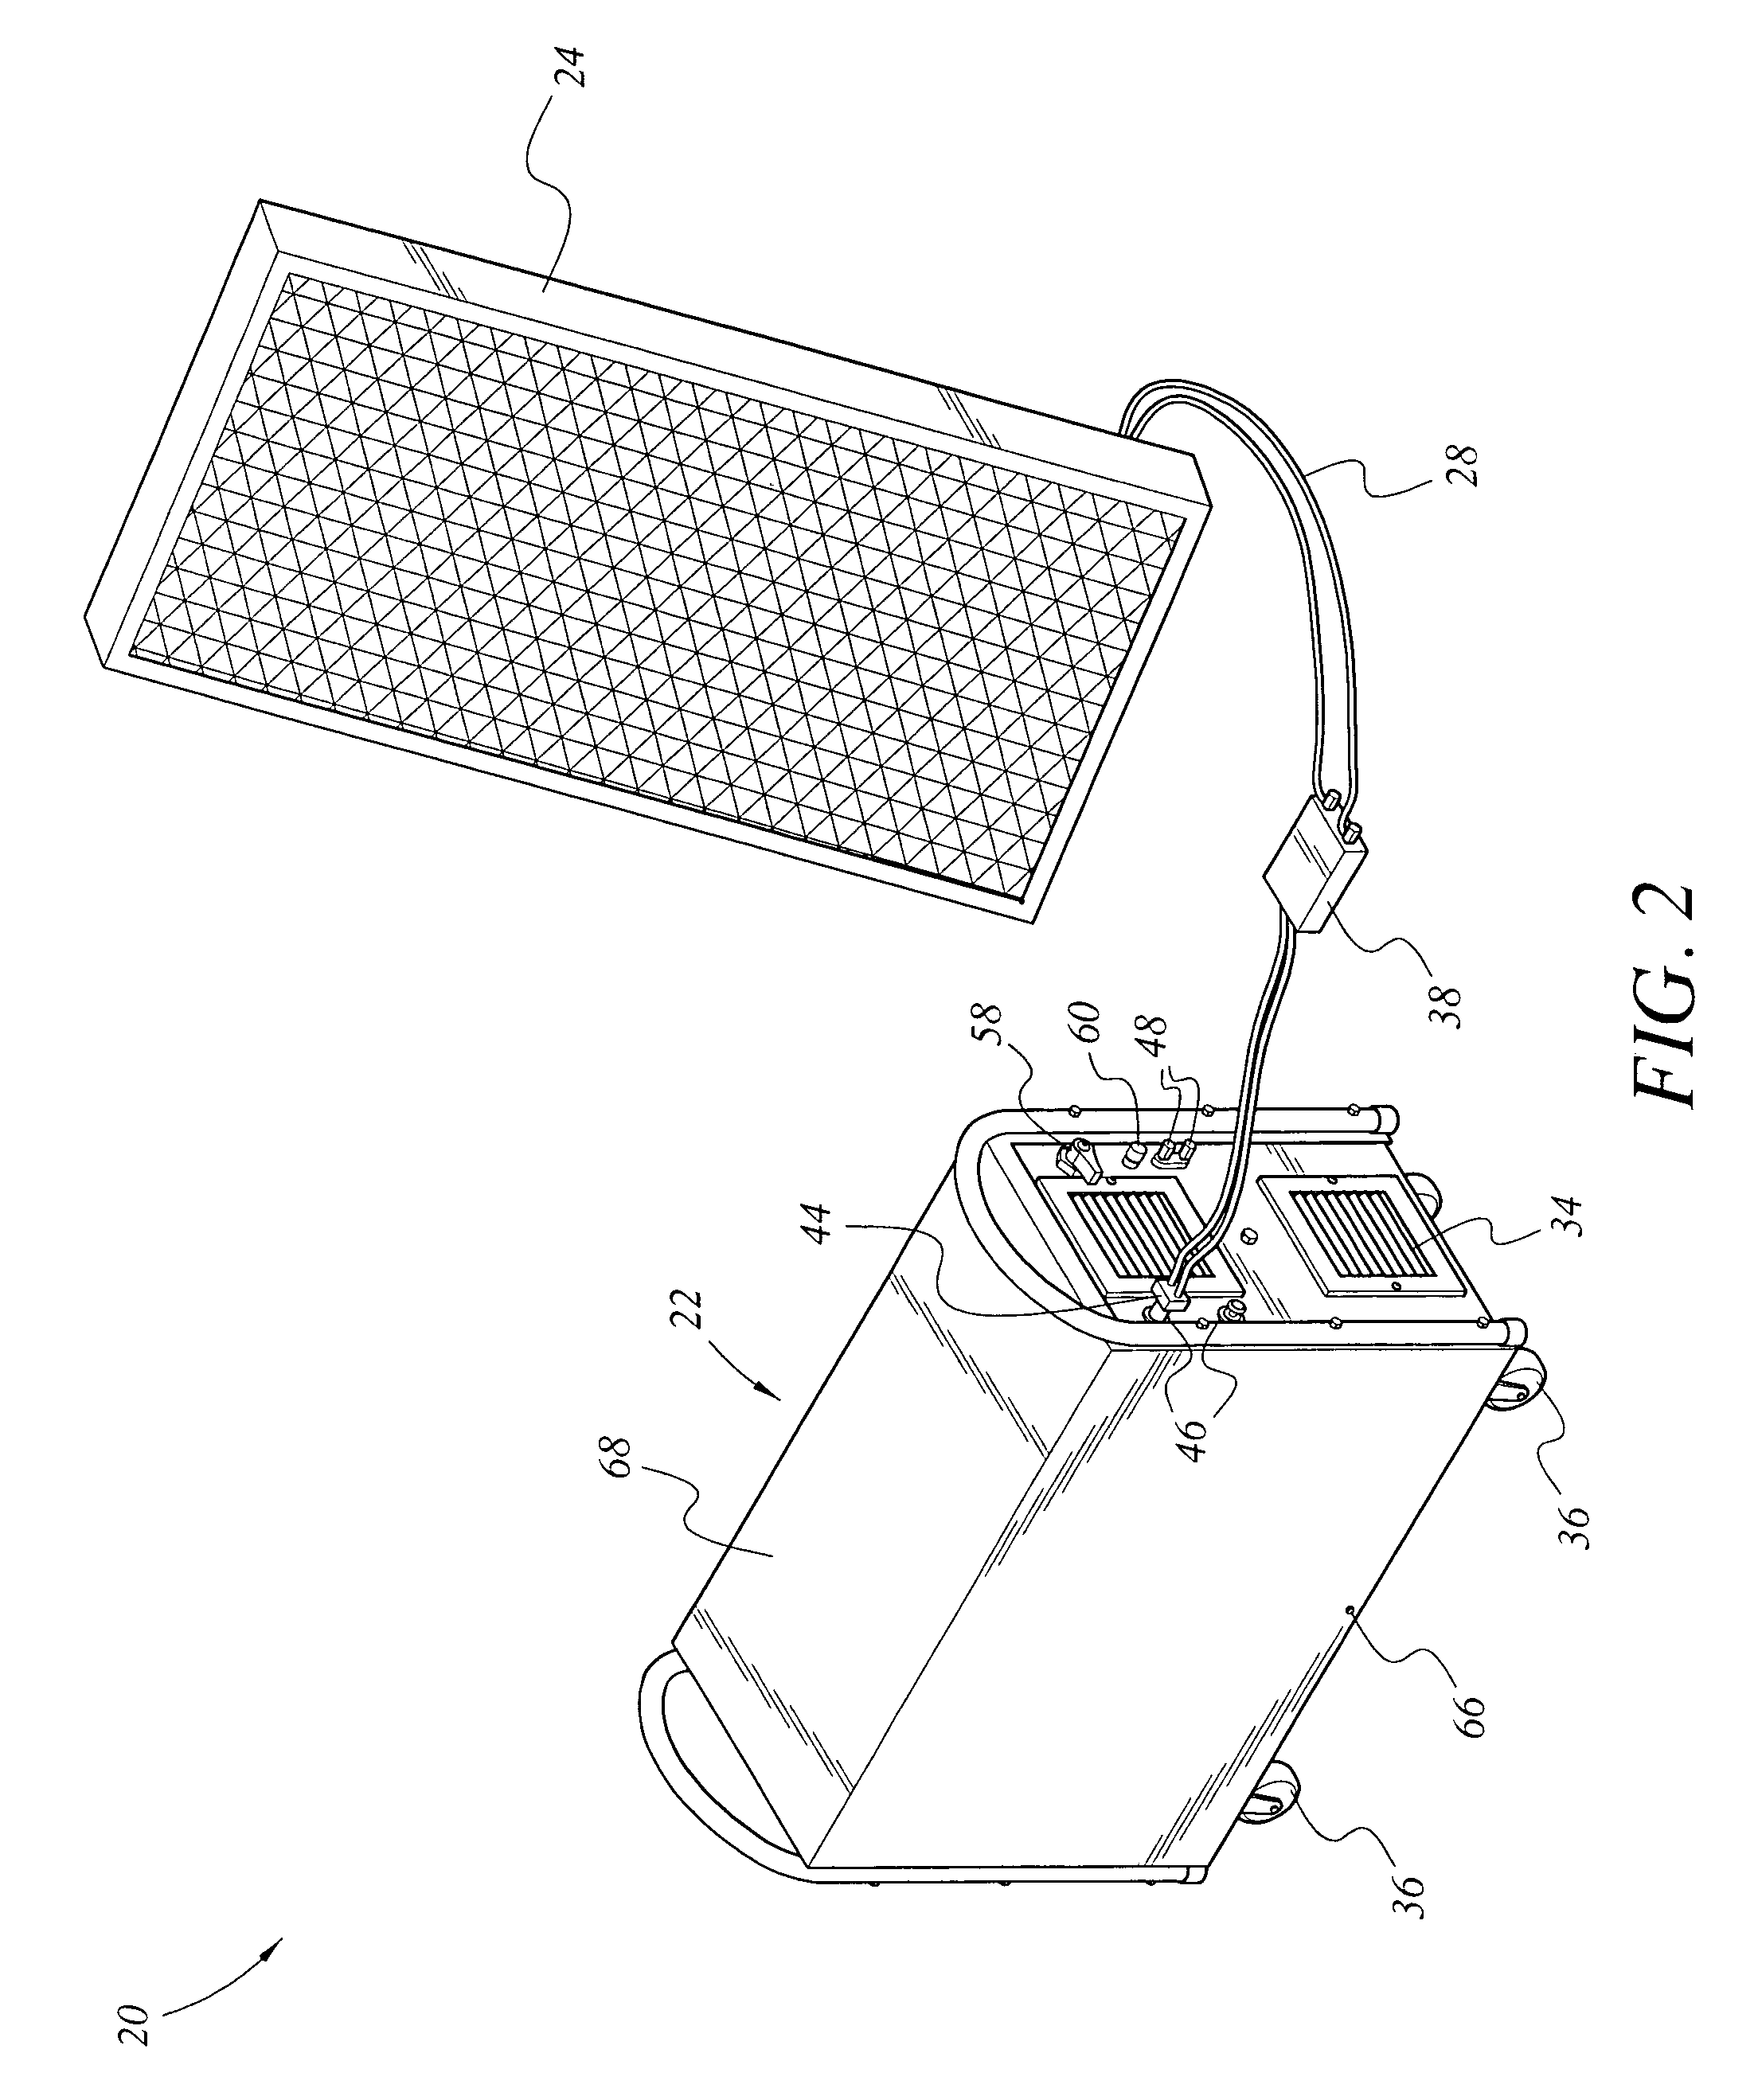 Portable solar energy system